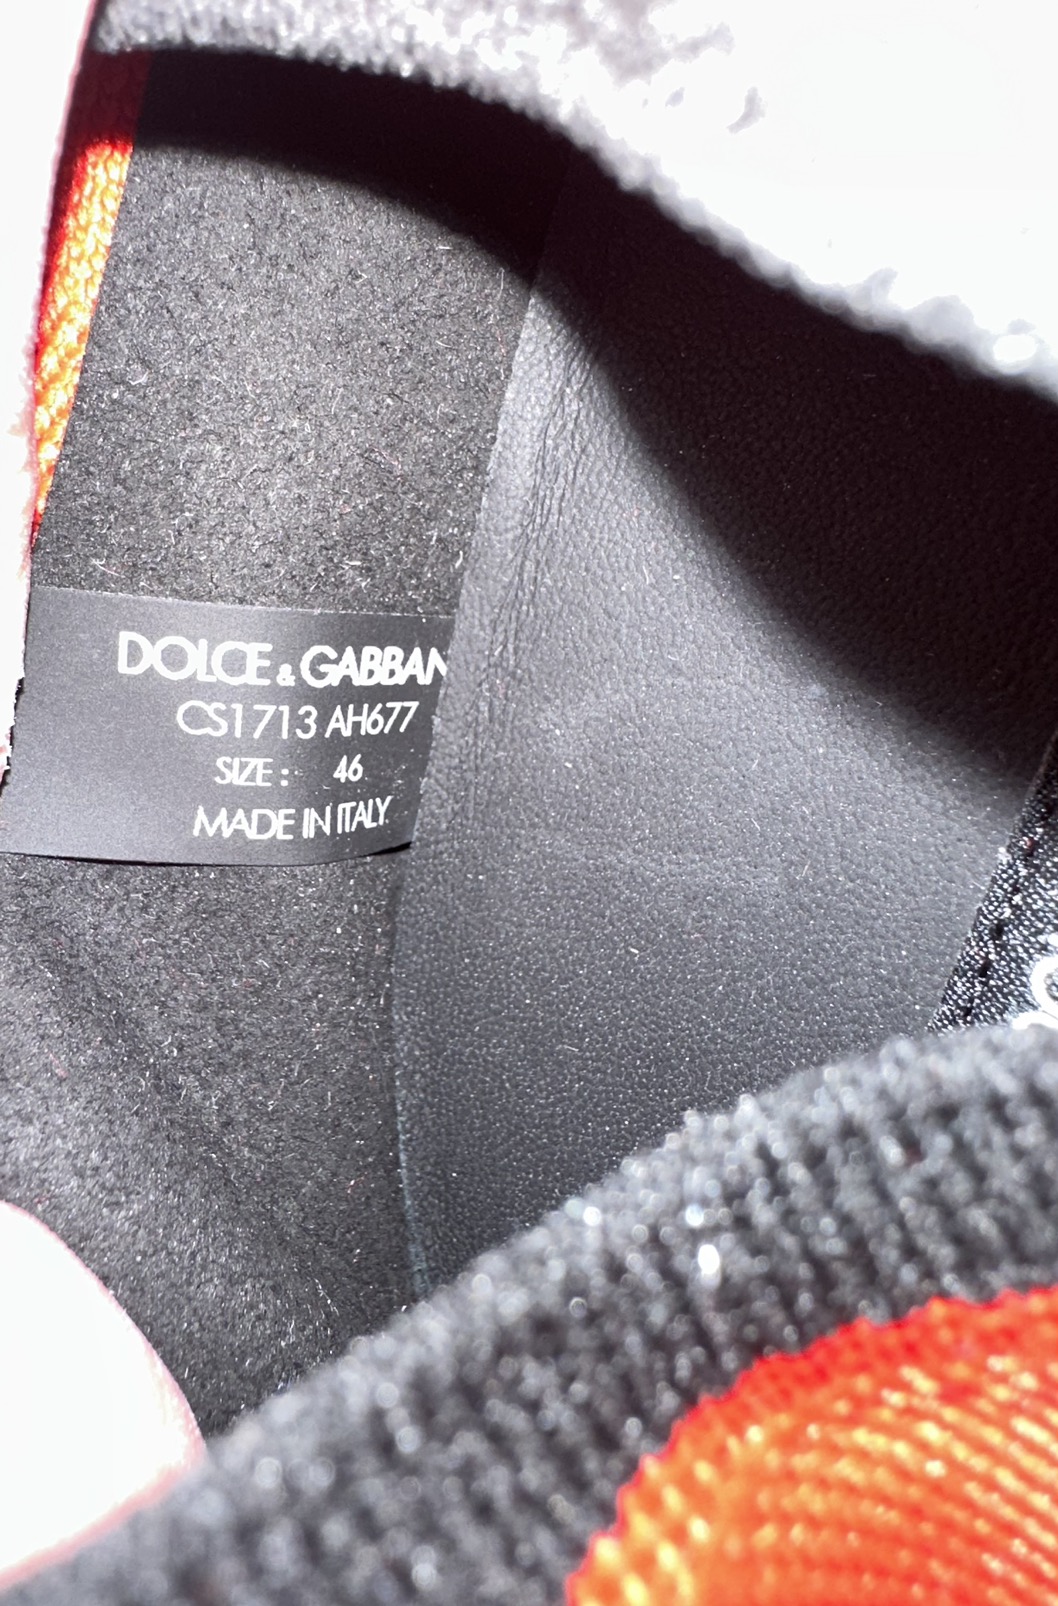 Dolce & Gabbana Sorrento Logo Sneakers - US 13 / EU 46 - NWT - 13